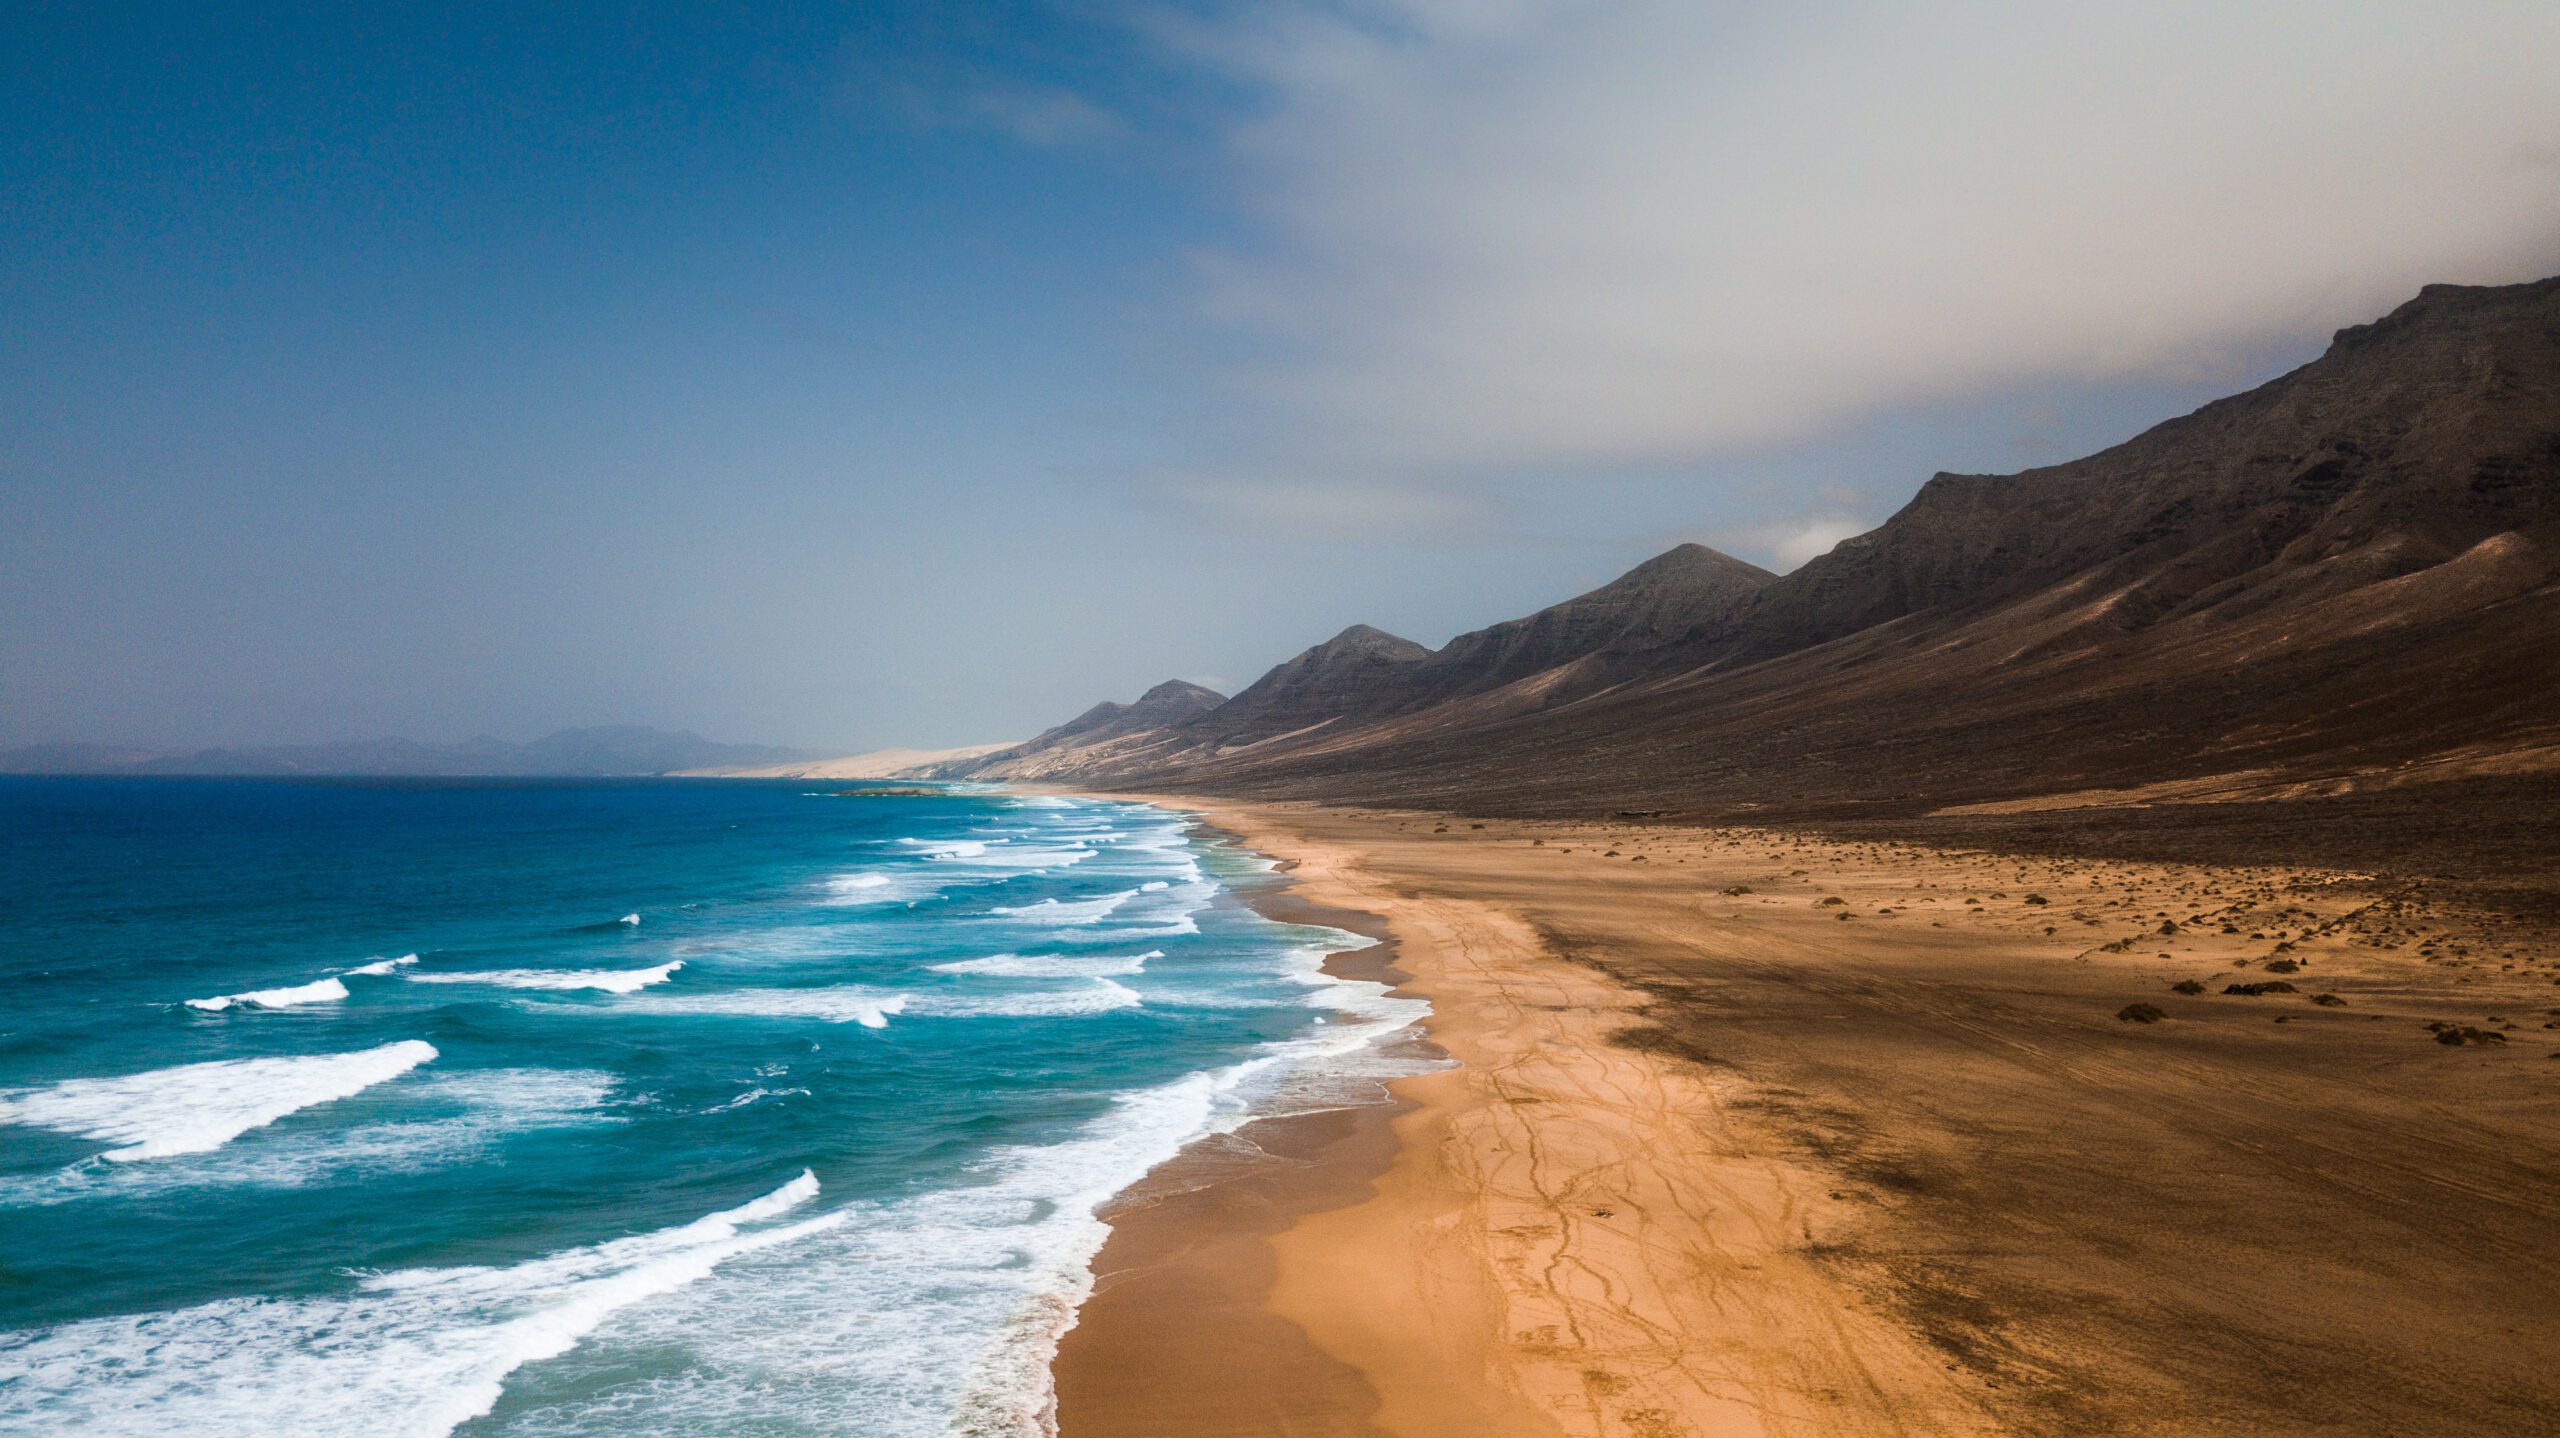 spanje-Fuerteventura-strand-zee-zand-bergen